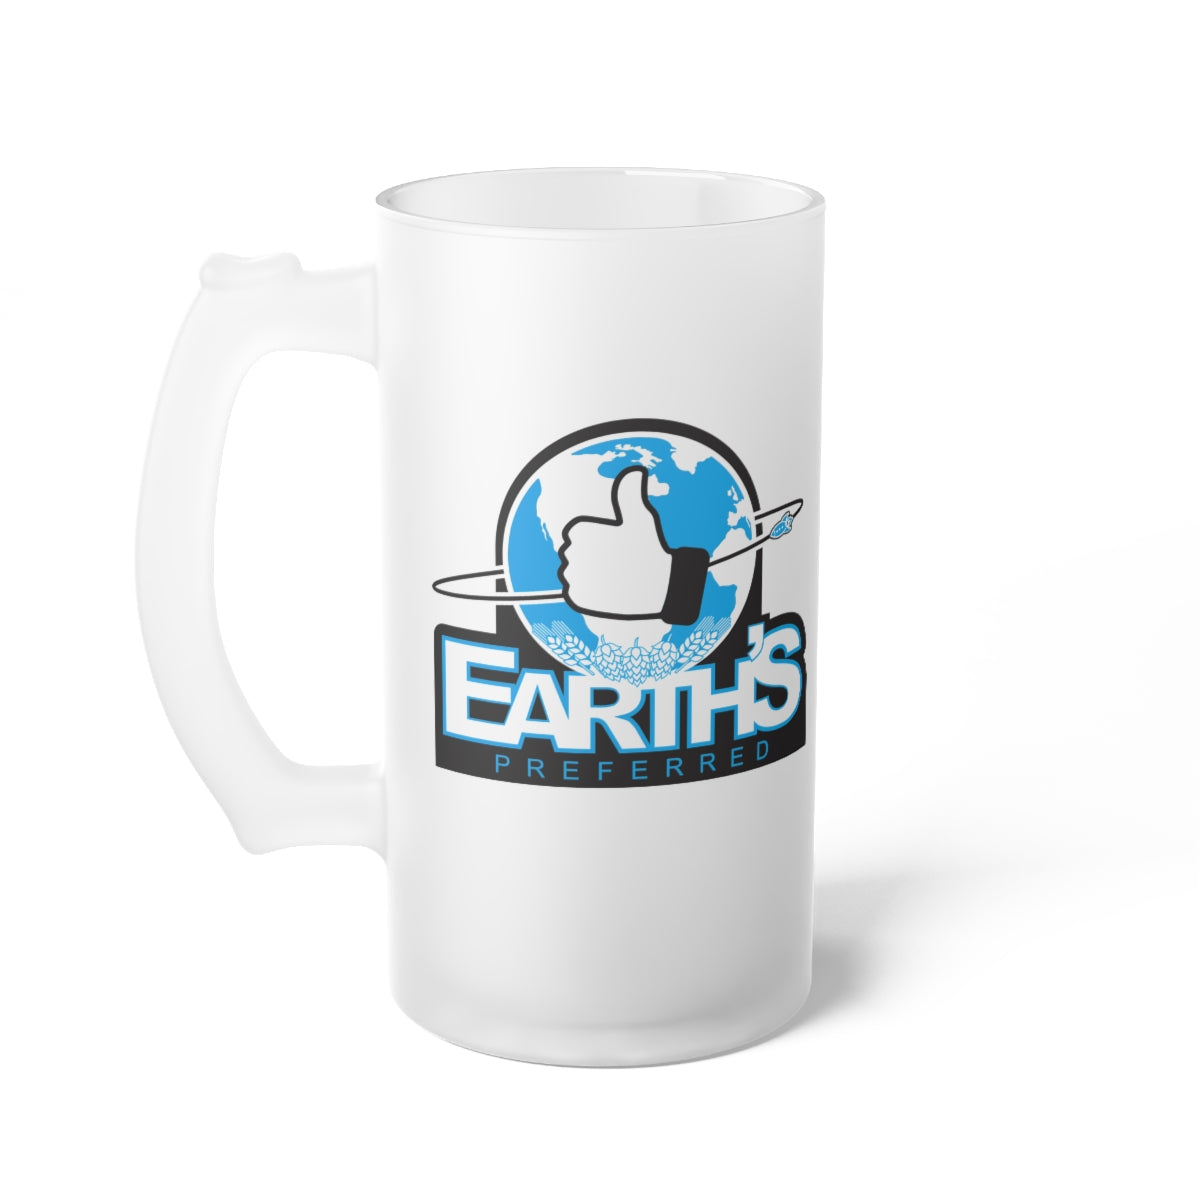 Black Ocean: Earth's Preferred frosted glass beer mug